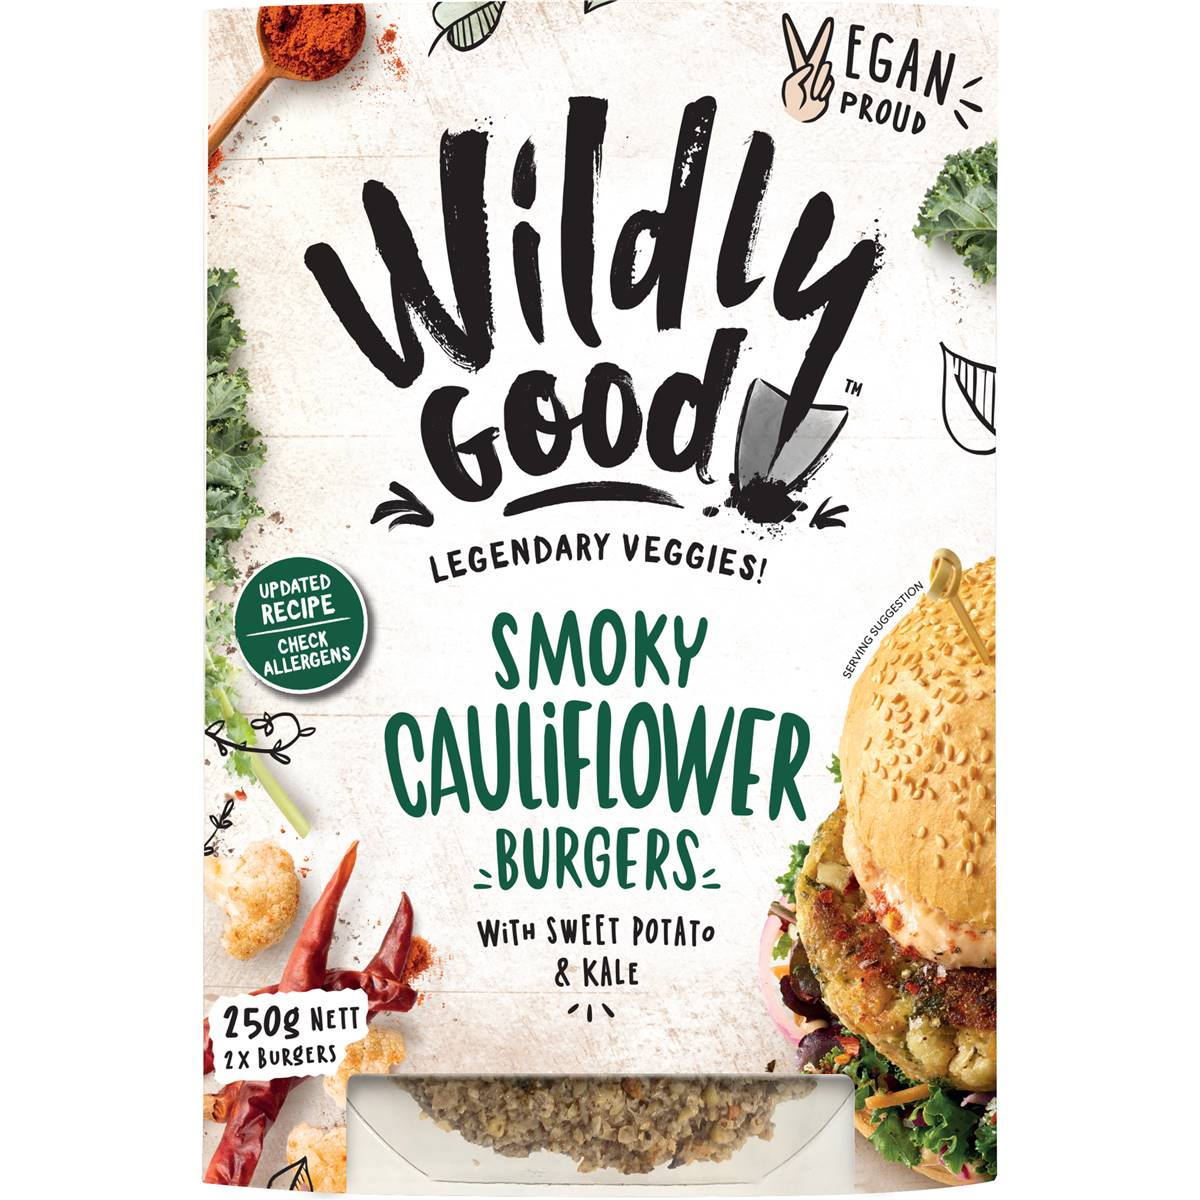 Calories in Wildly Good Smoky Cauliflower Burgers?